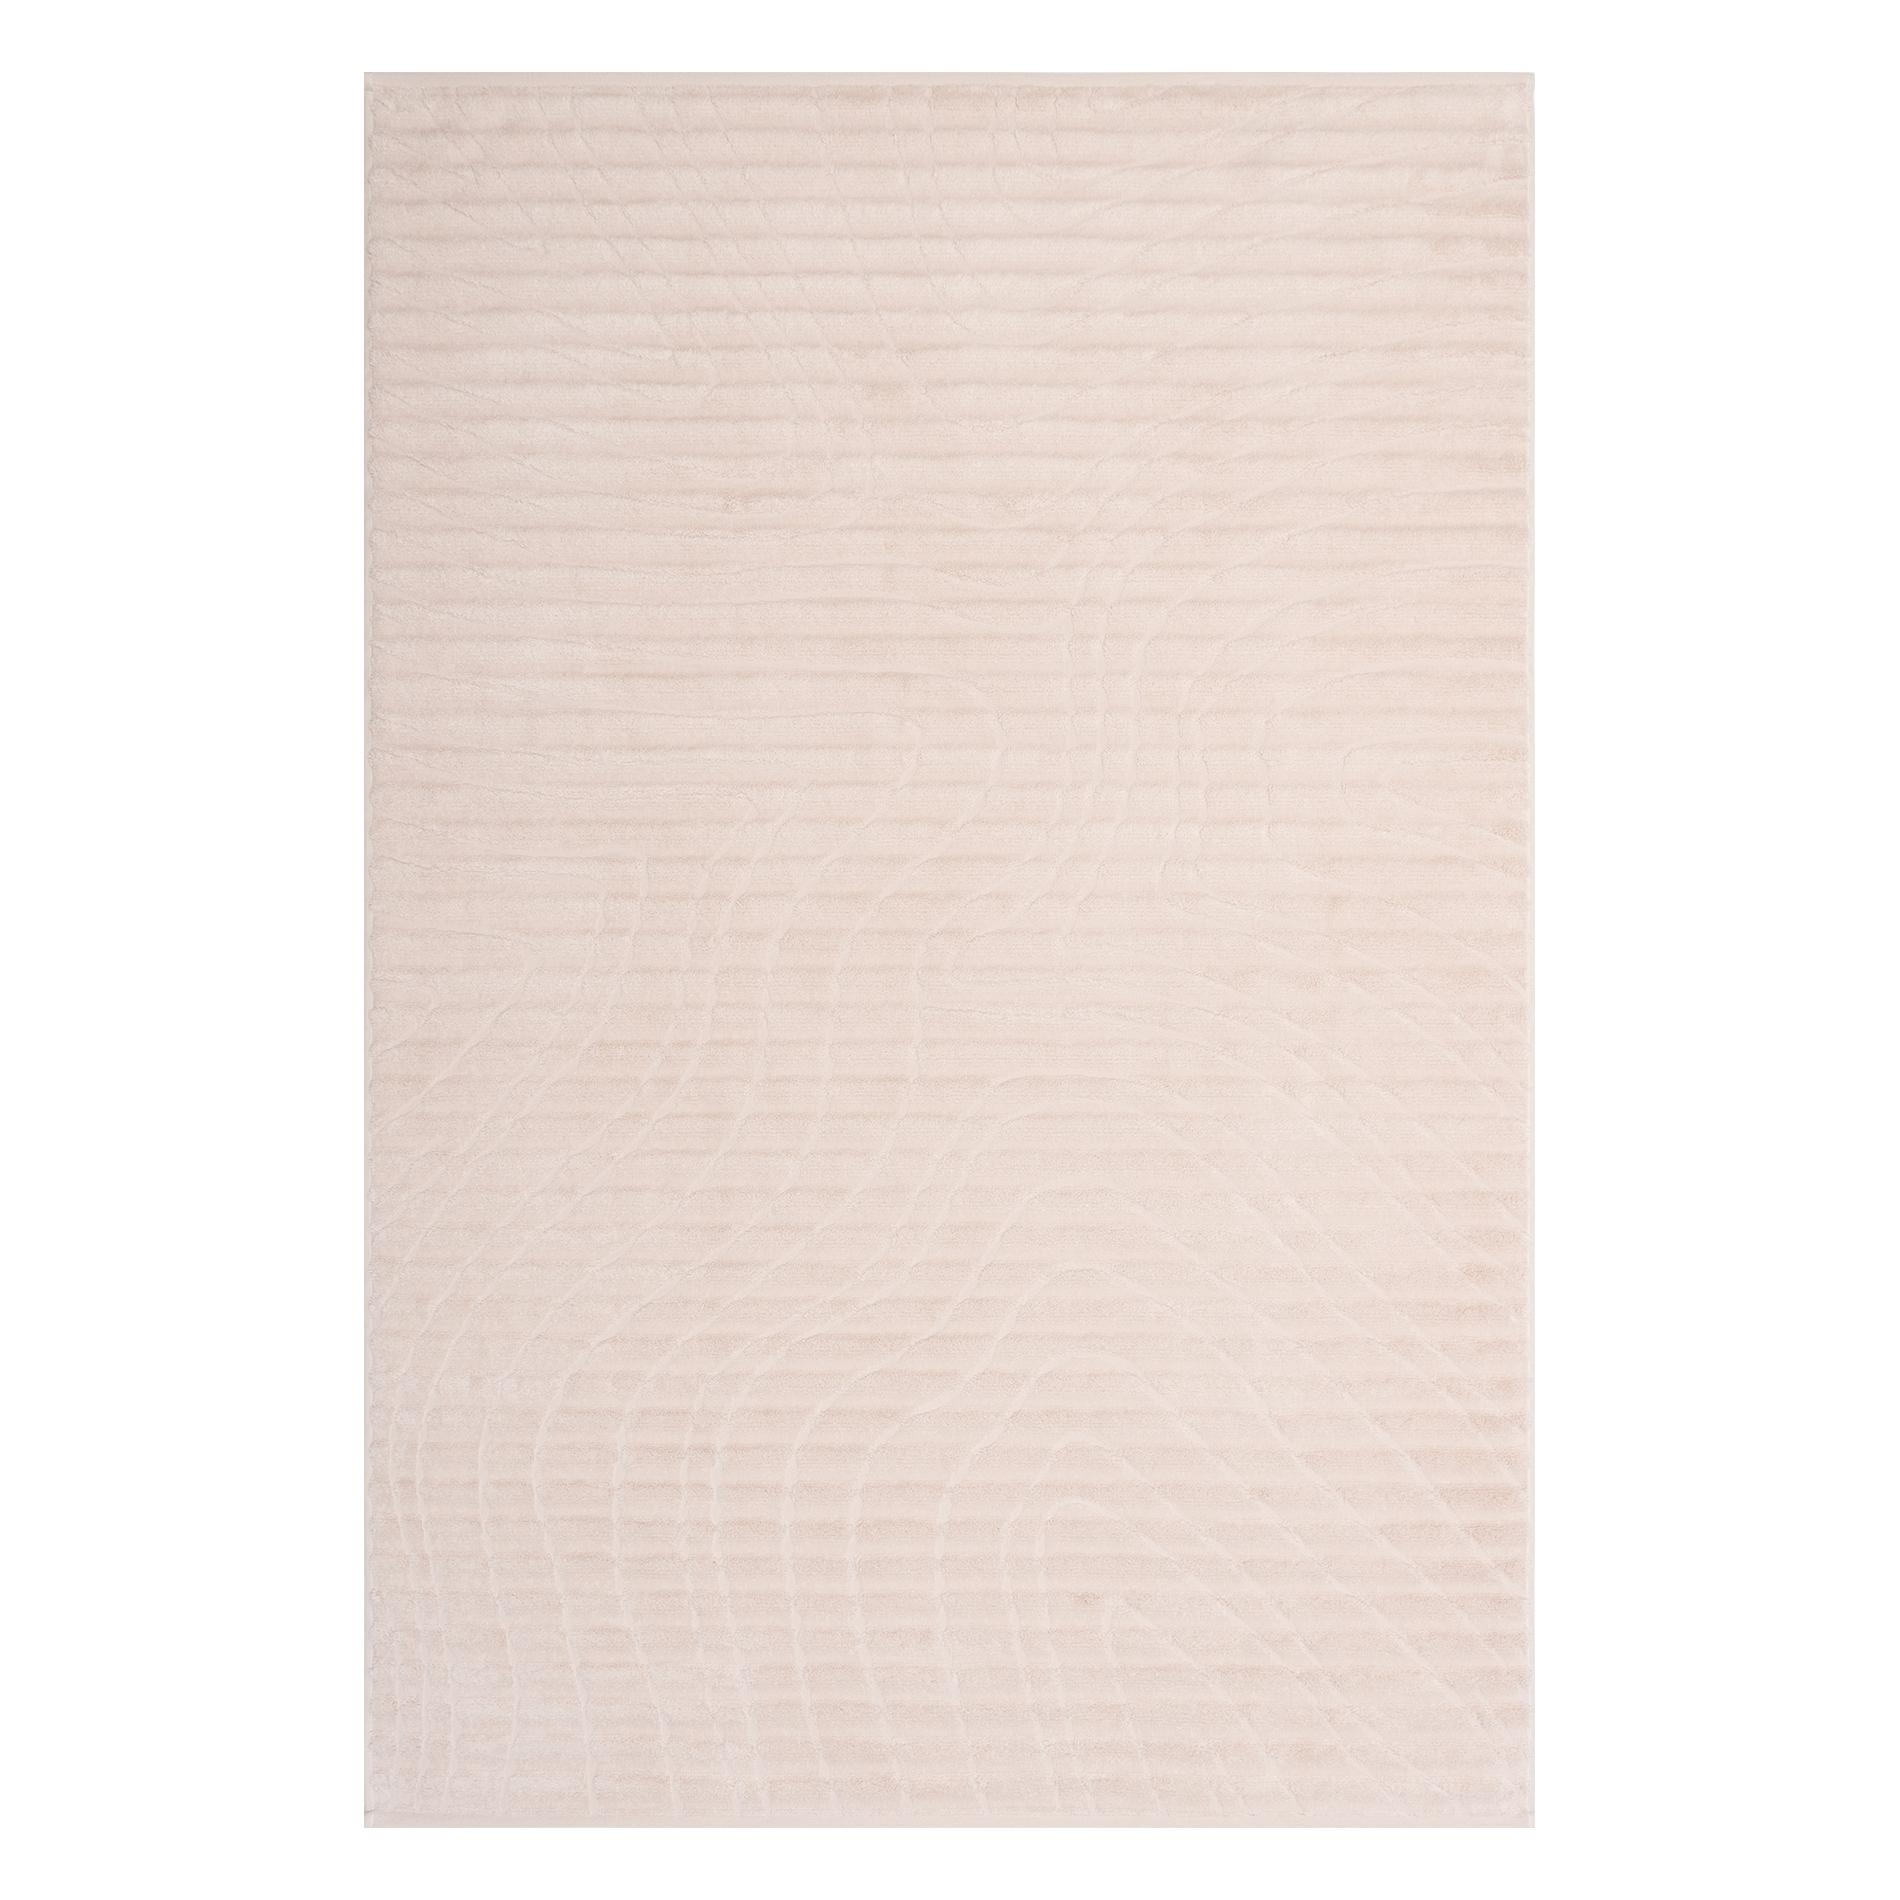 Махровое полотенце Cleanelly Albero bianco молочное 100х150 см полотенце махровое cleanelly пиоппо 100х150 см